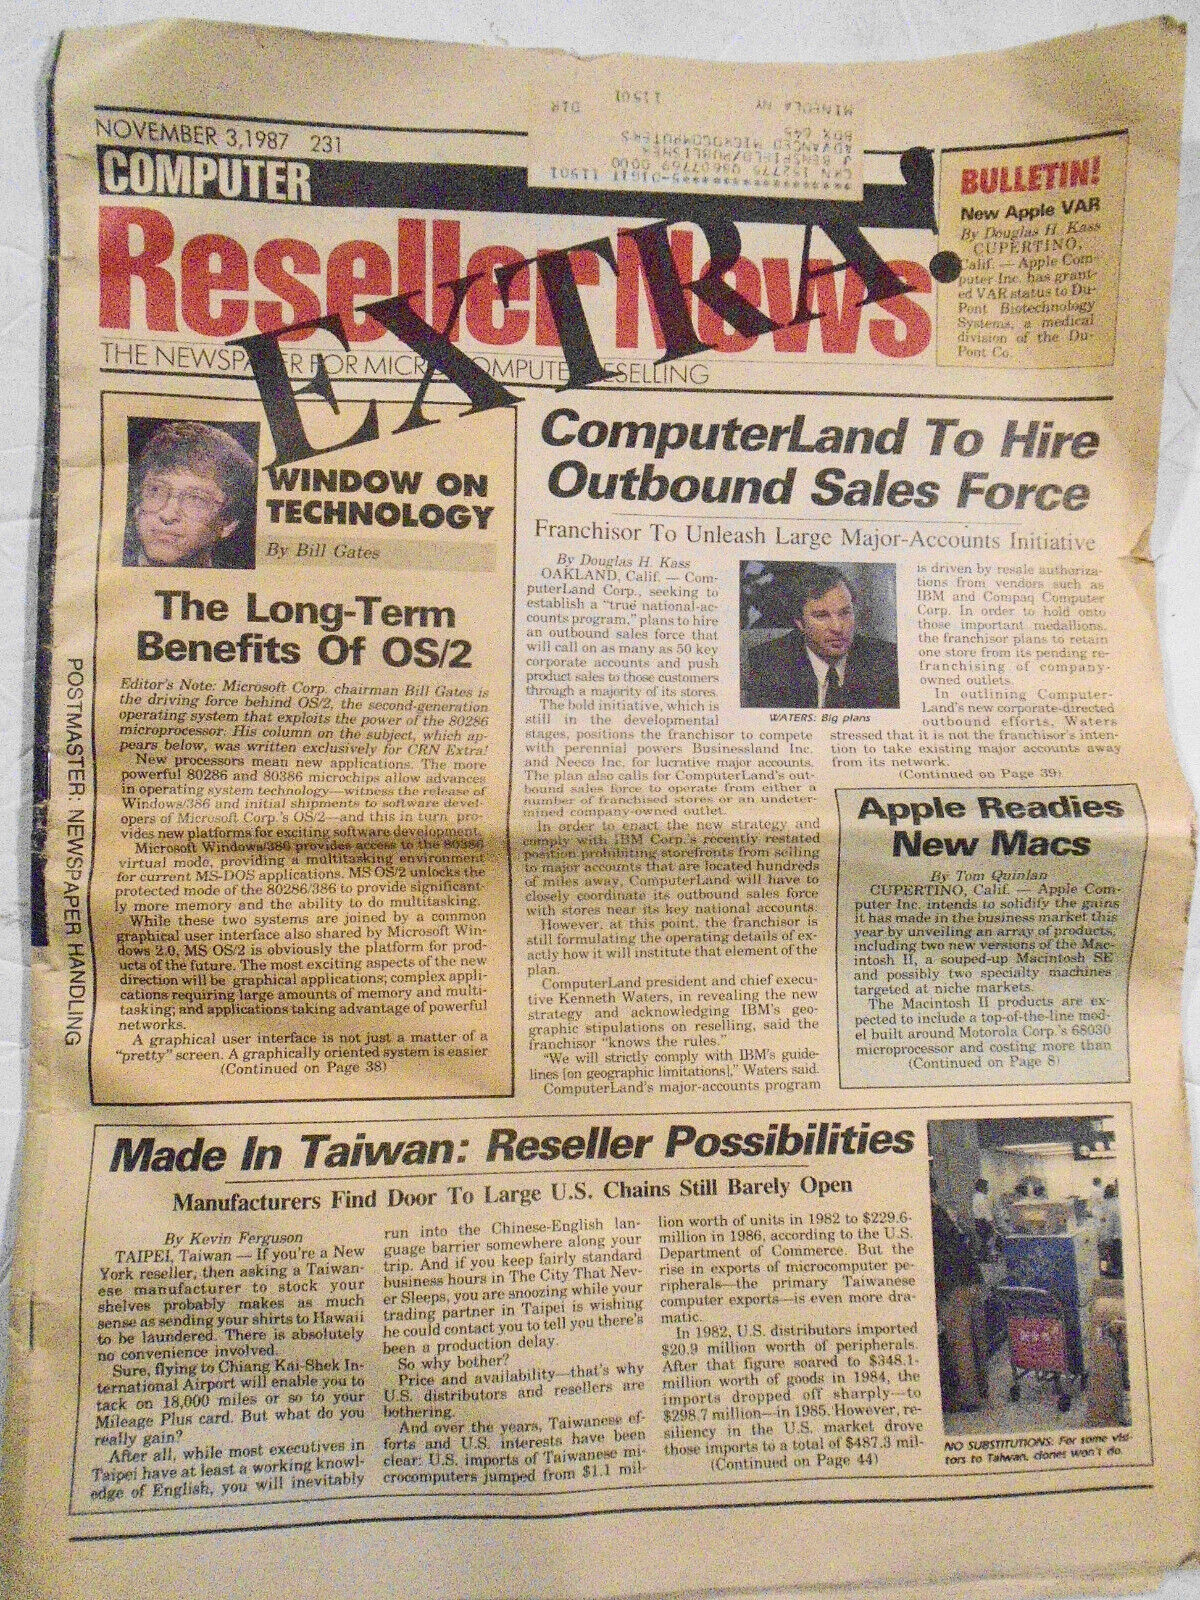 Computer Reseller News Extra, November 3, 1987